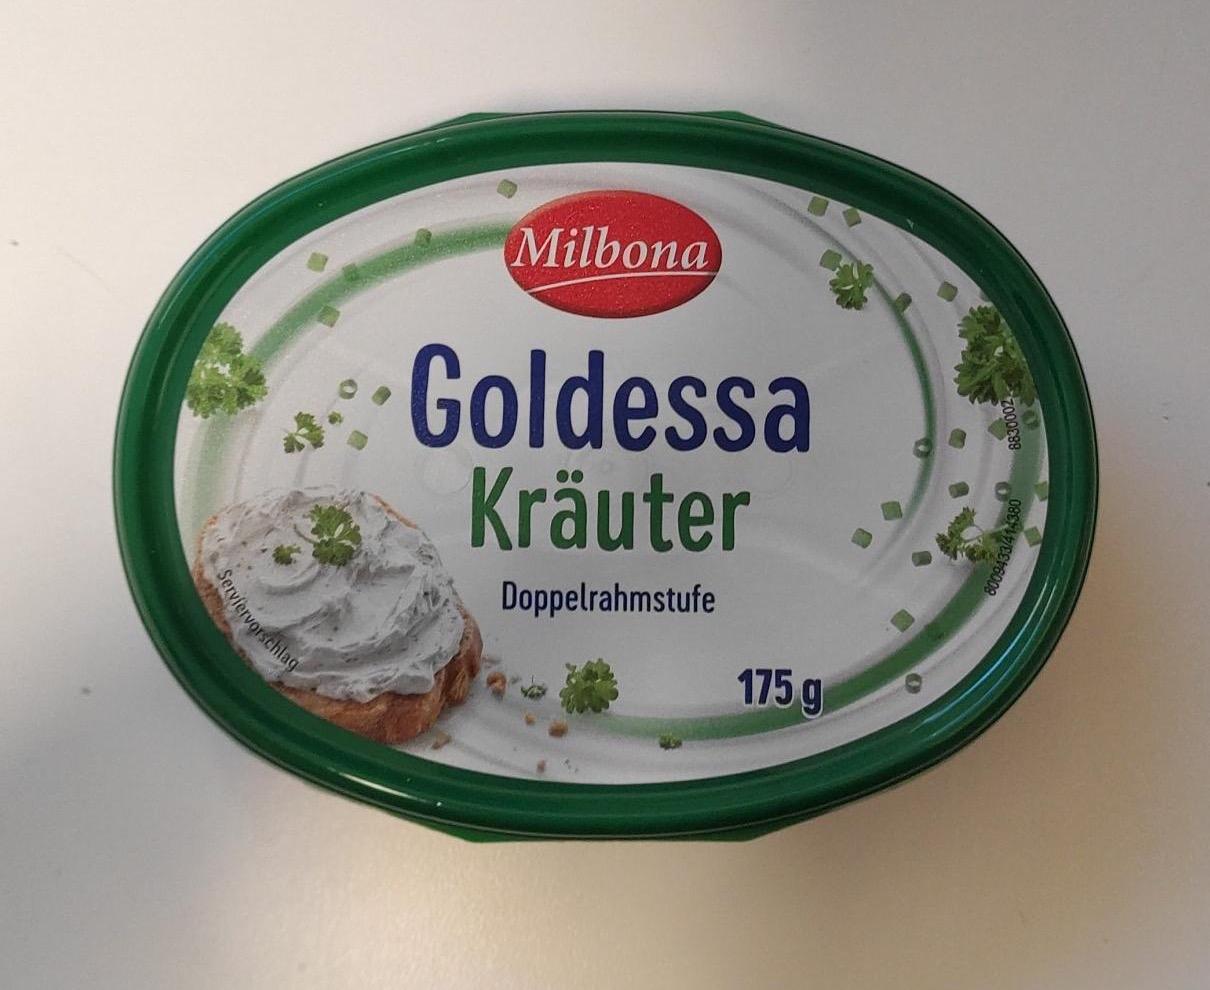 Képek - Goldessa kräuter Milbona